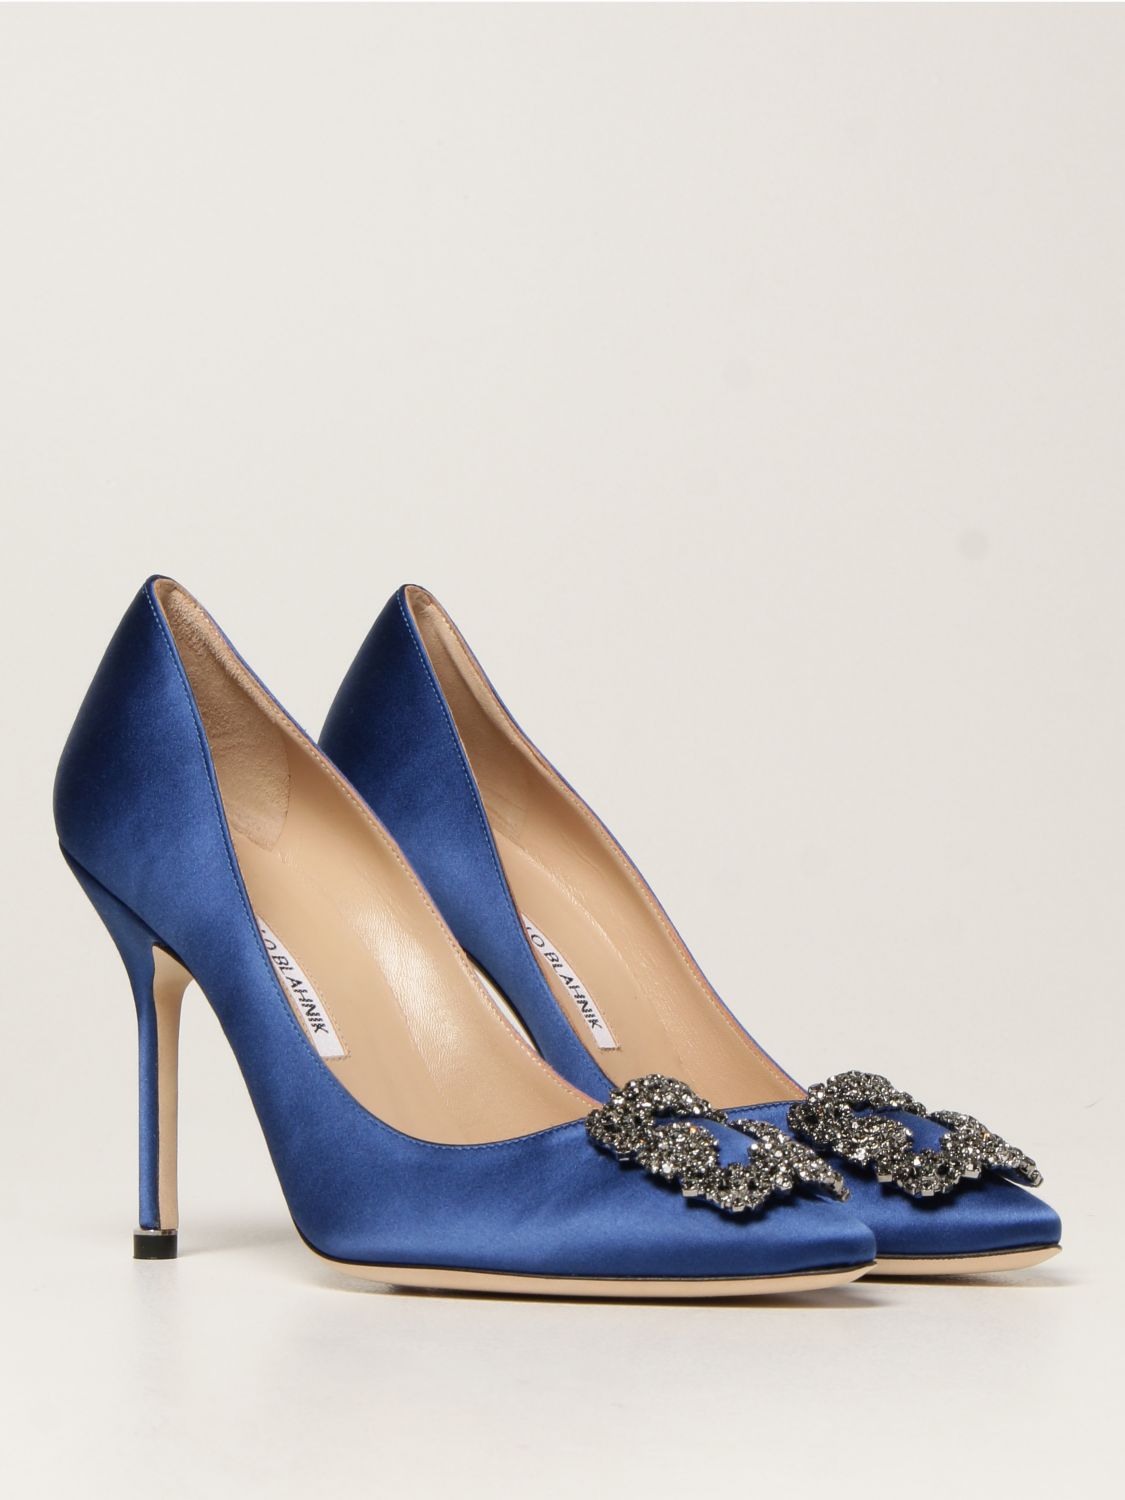 Escarpins Manolo Blahnik: Chaussures femme Manolo Blahnik bleu royal 2